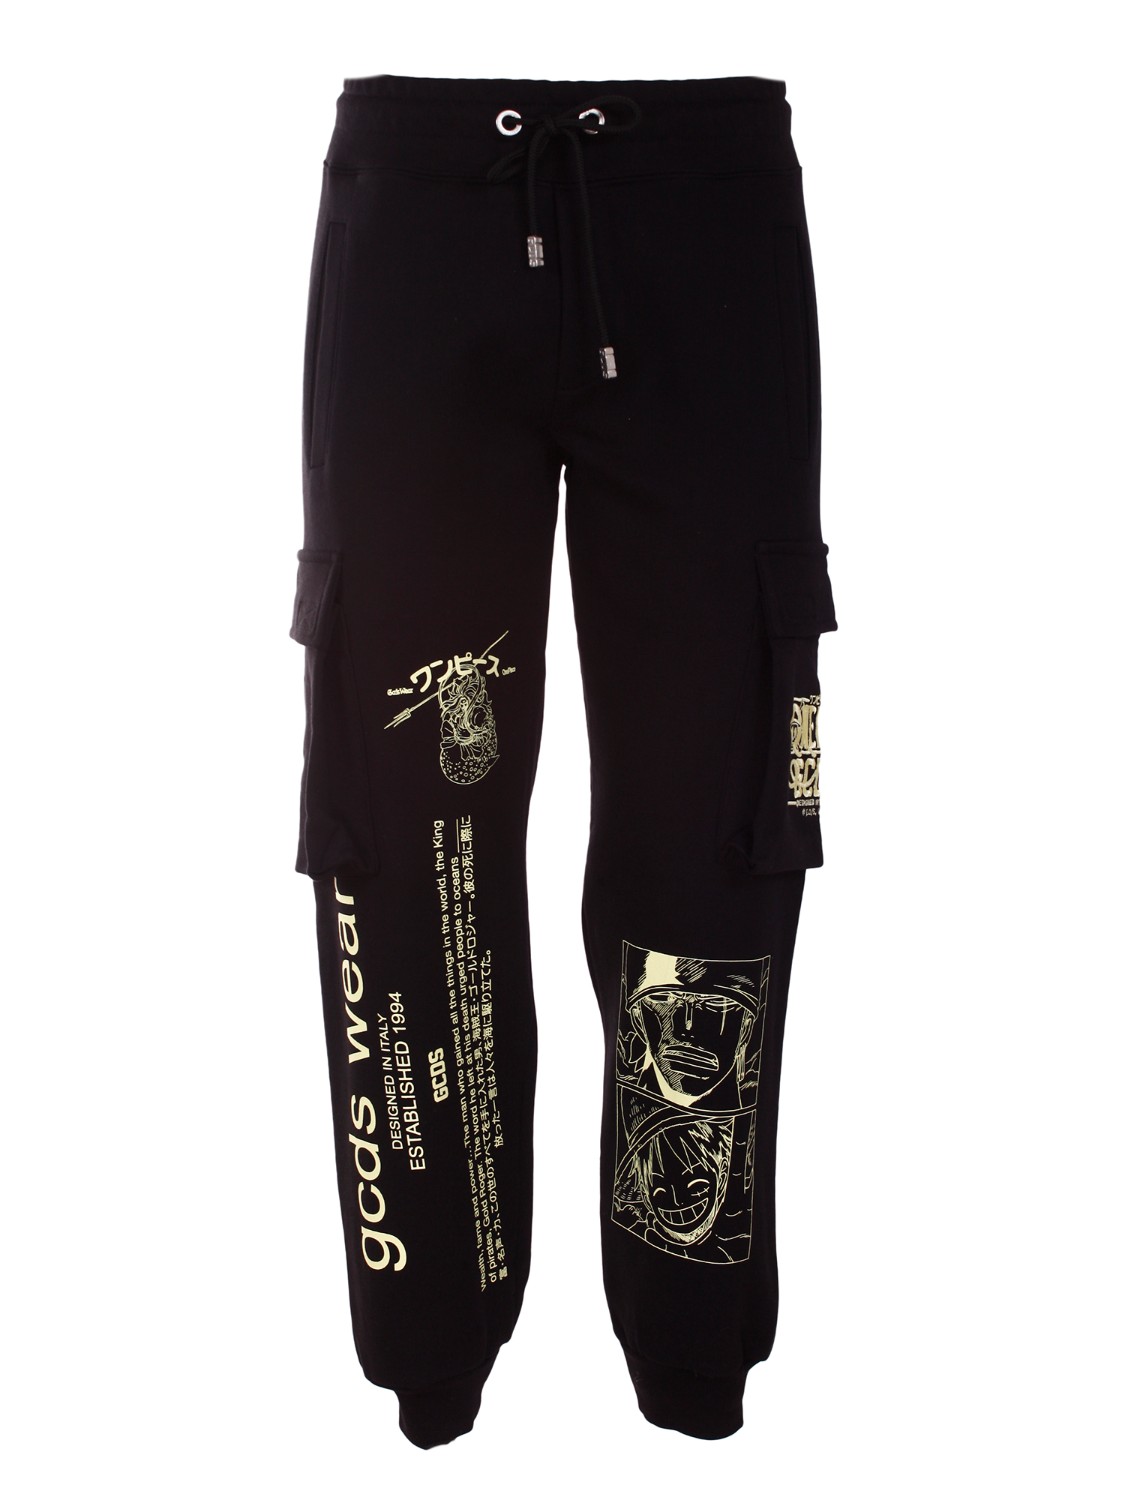 shop GCDS Saldi Pantalone: GCDS pantalone jogging con stampe " One Piece".
Tasche laterali.
Oversize fit.
Composizione: 100% cotone.
Fabbricato in Romania.. OP22M390606-02 number 8903999